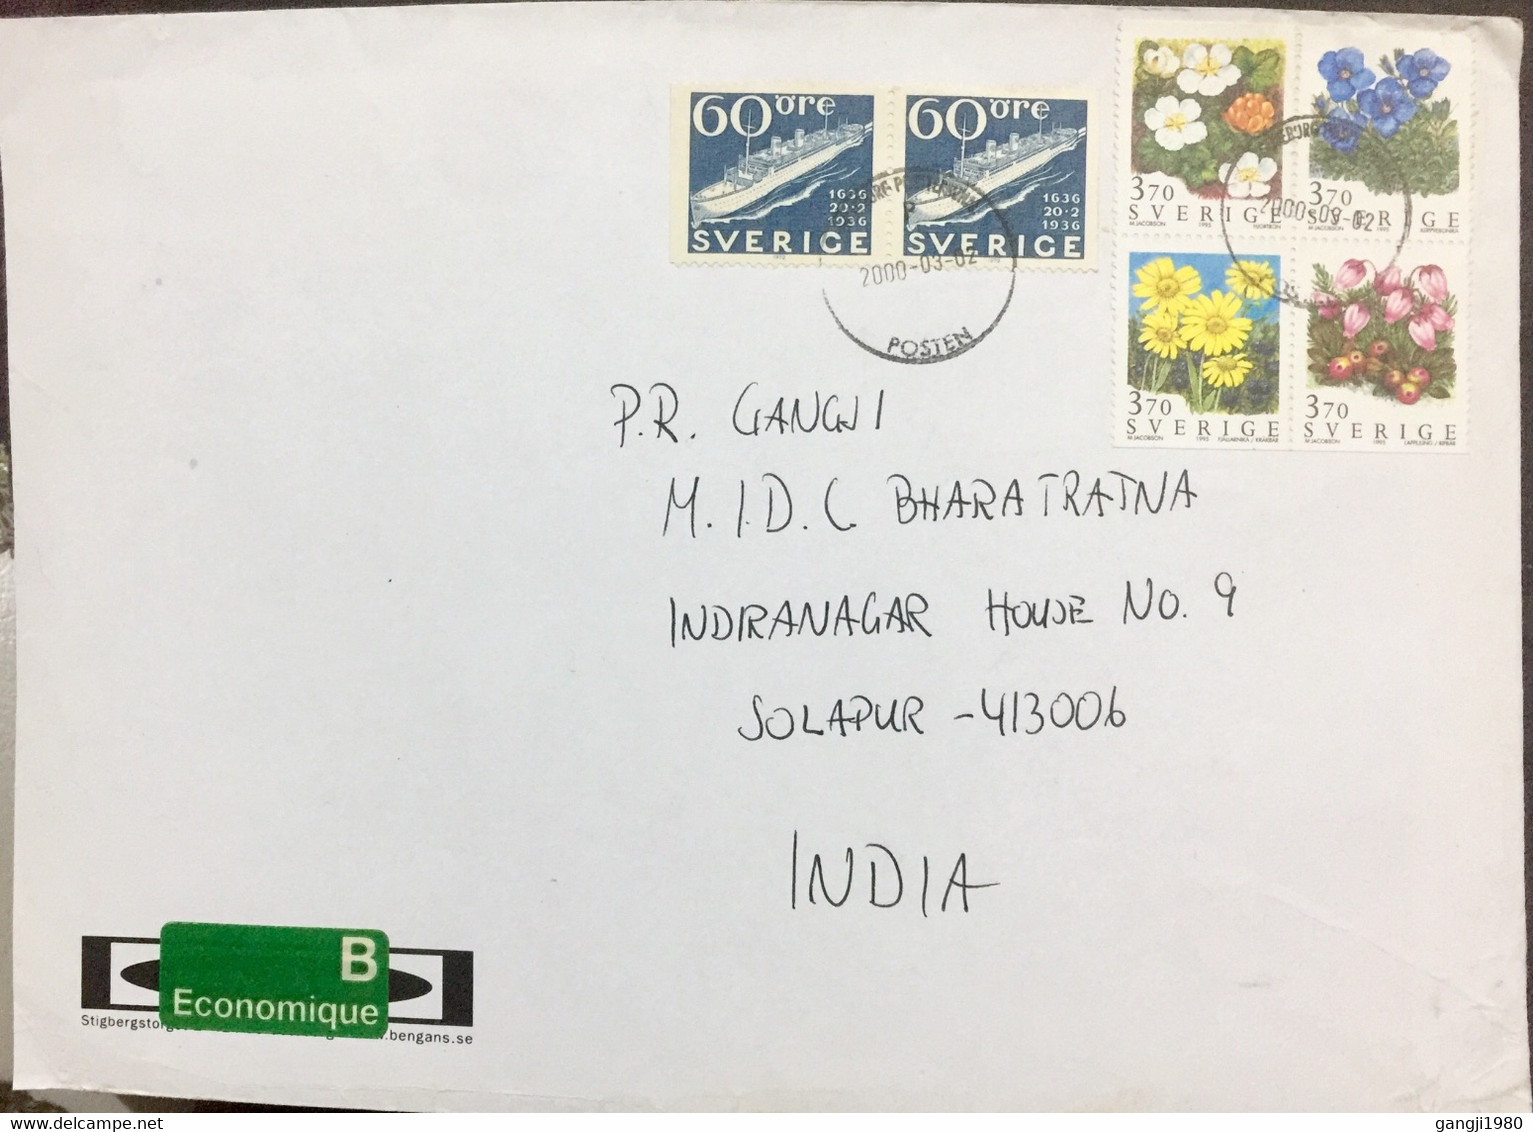 SWEDEN 2000, COVER VIGNETTE ECONOMIQUE GREEN LABEL USED TO INDIA,STAMPS 4 STAMPS FLOWERS BLOCK,SHIP PAIR - Brieven En Documenten